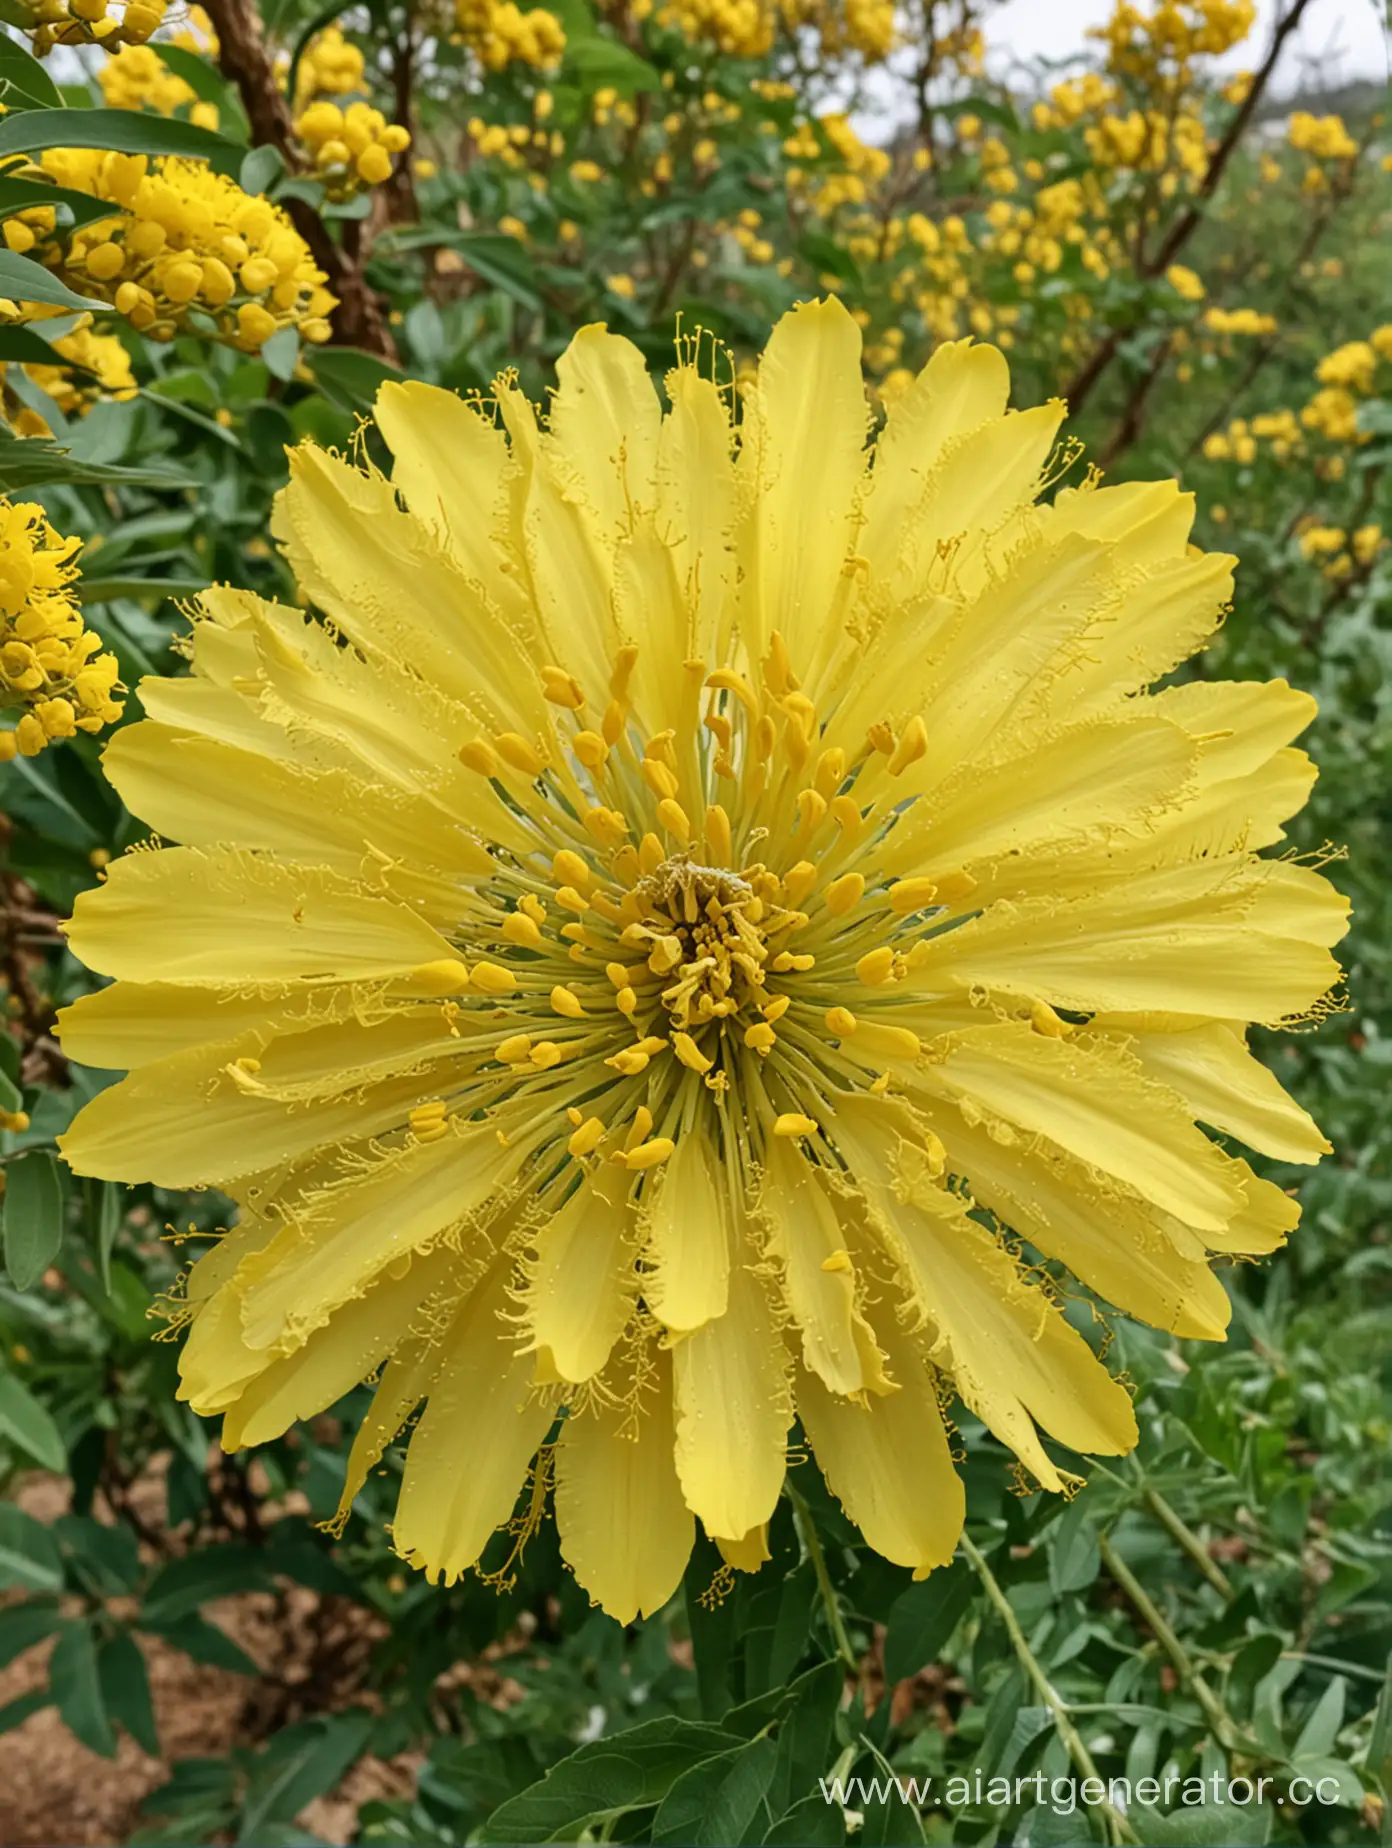 Acacia yellow big flower close up 8k between plants